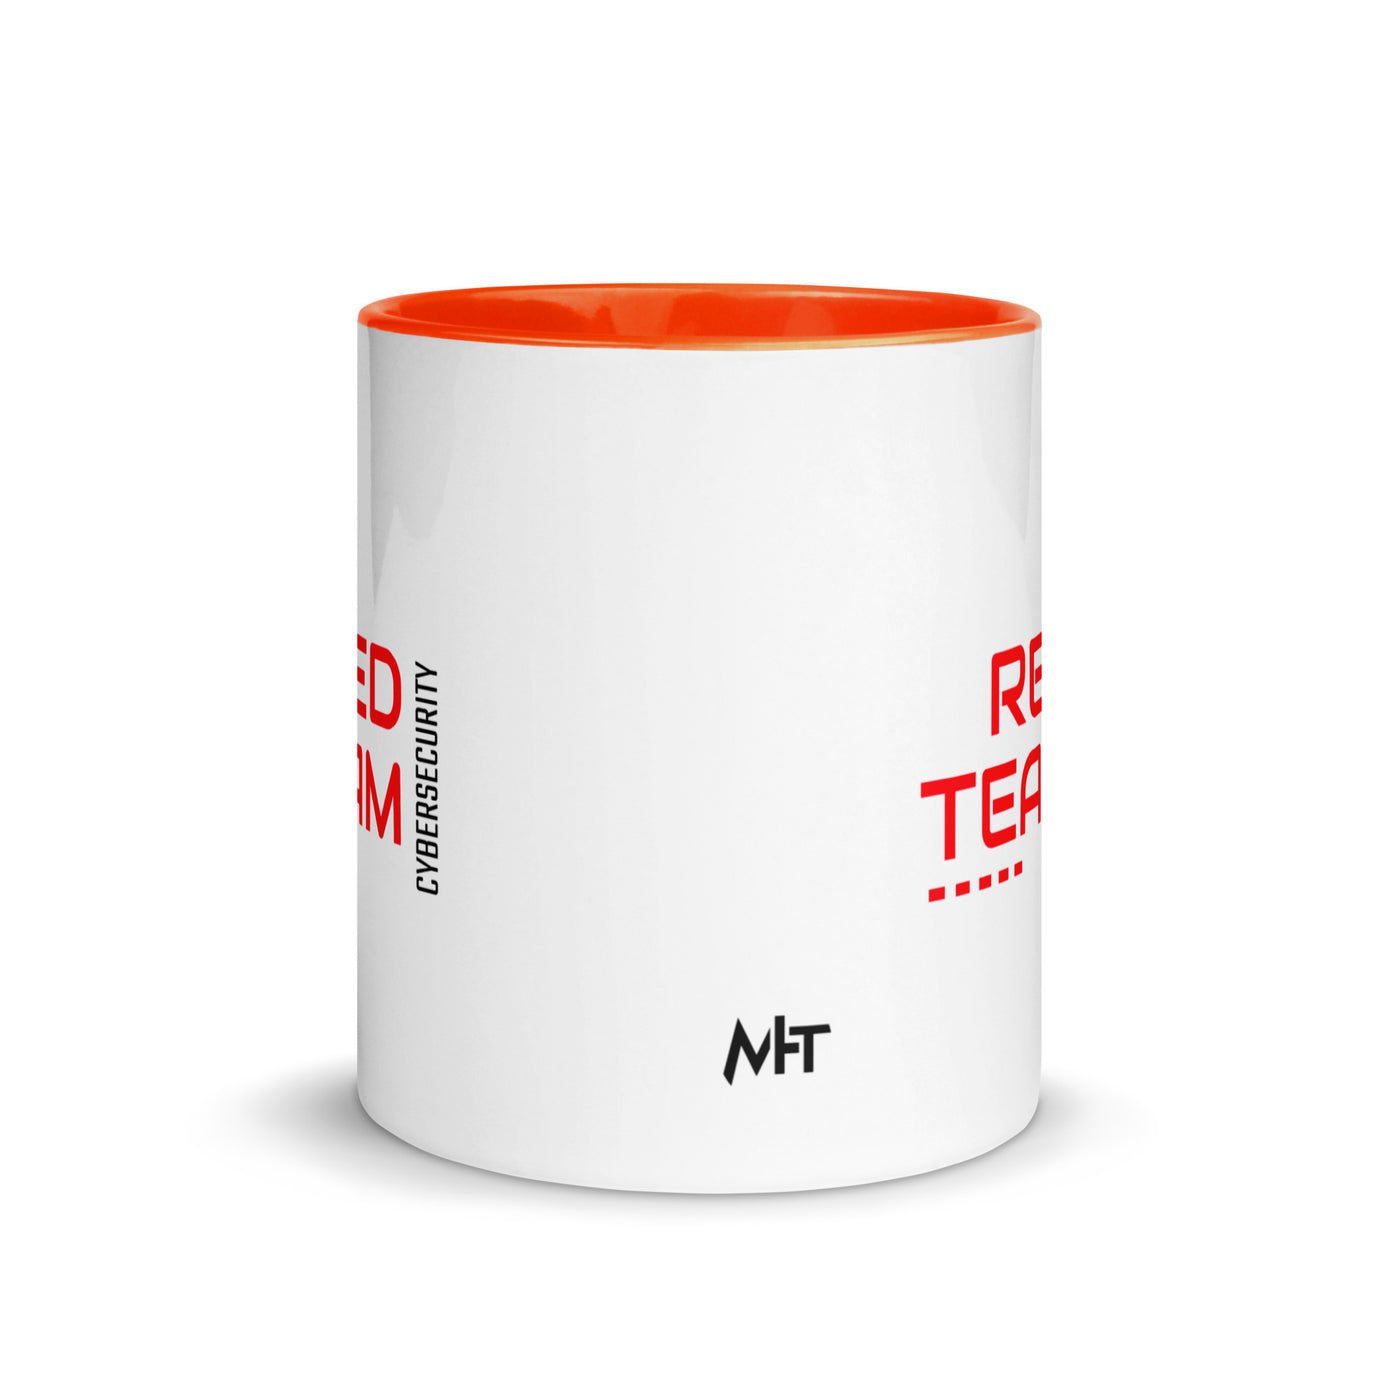 Cyber Security Red Team V14 - Mug with Color Inside